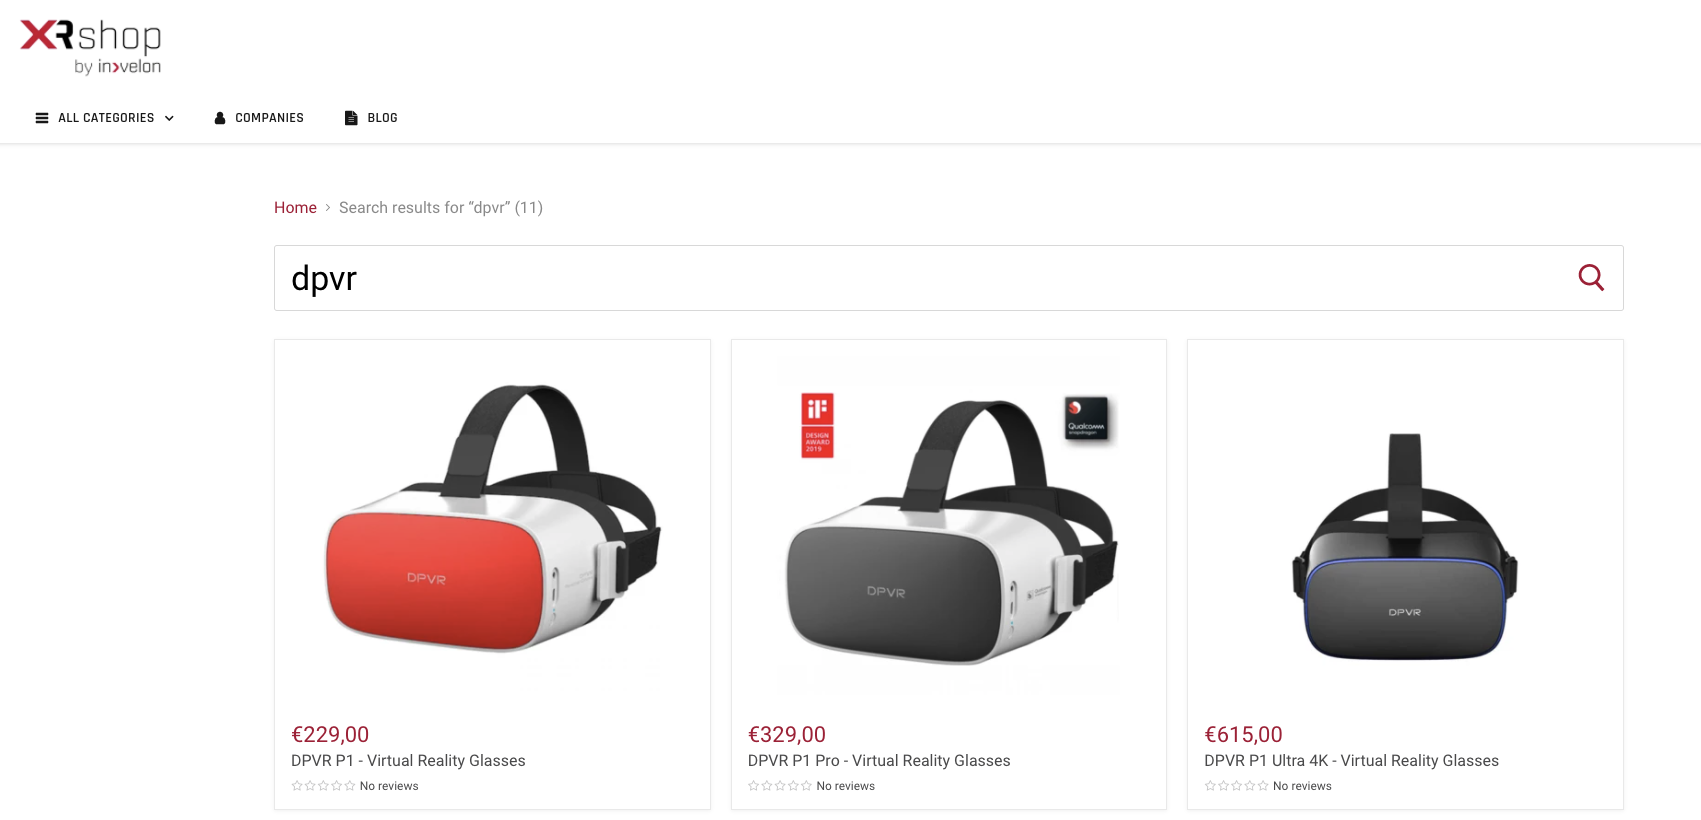 XR-Shop-selling-DPVR-virtual-reality-headsets